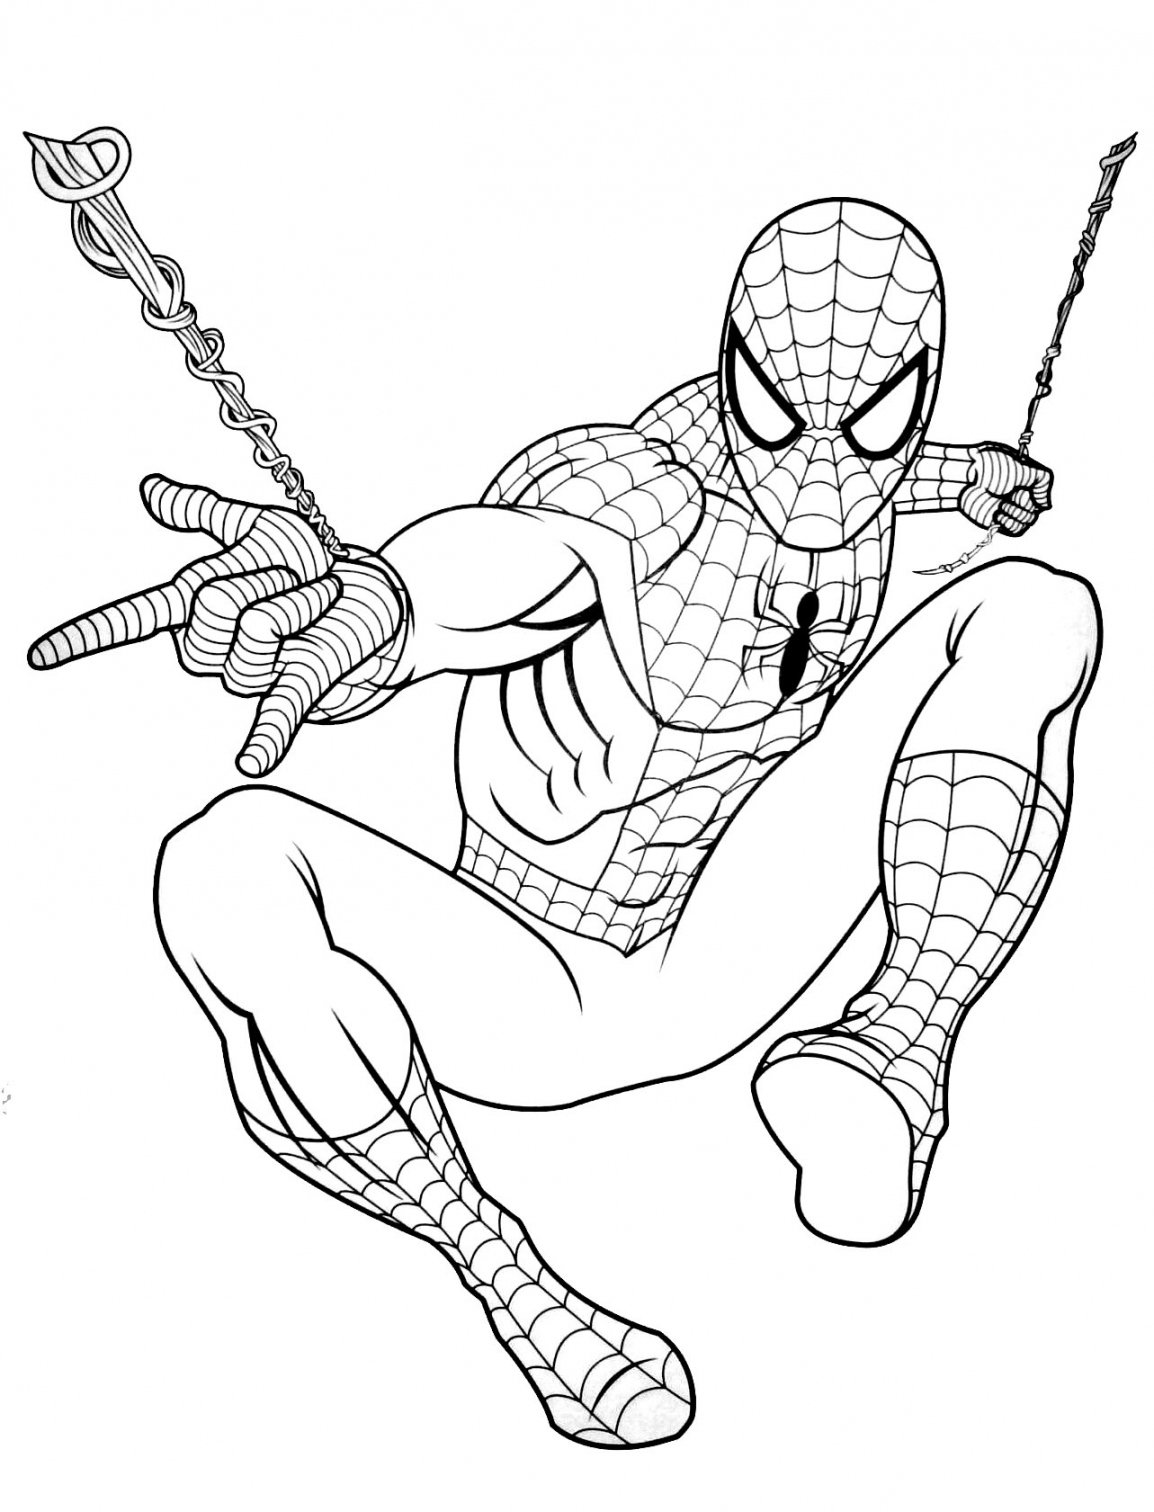 Free Spiderman Coloring Pages Printable - Printable - Free Spiderman drawing to print and color - Spiderman Kids